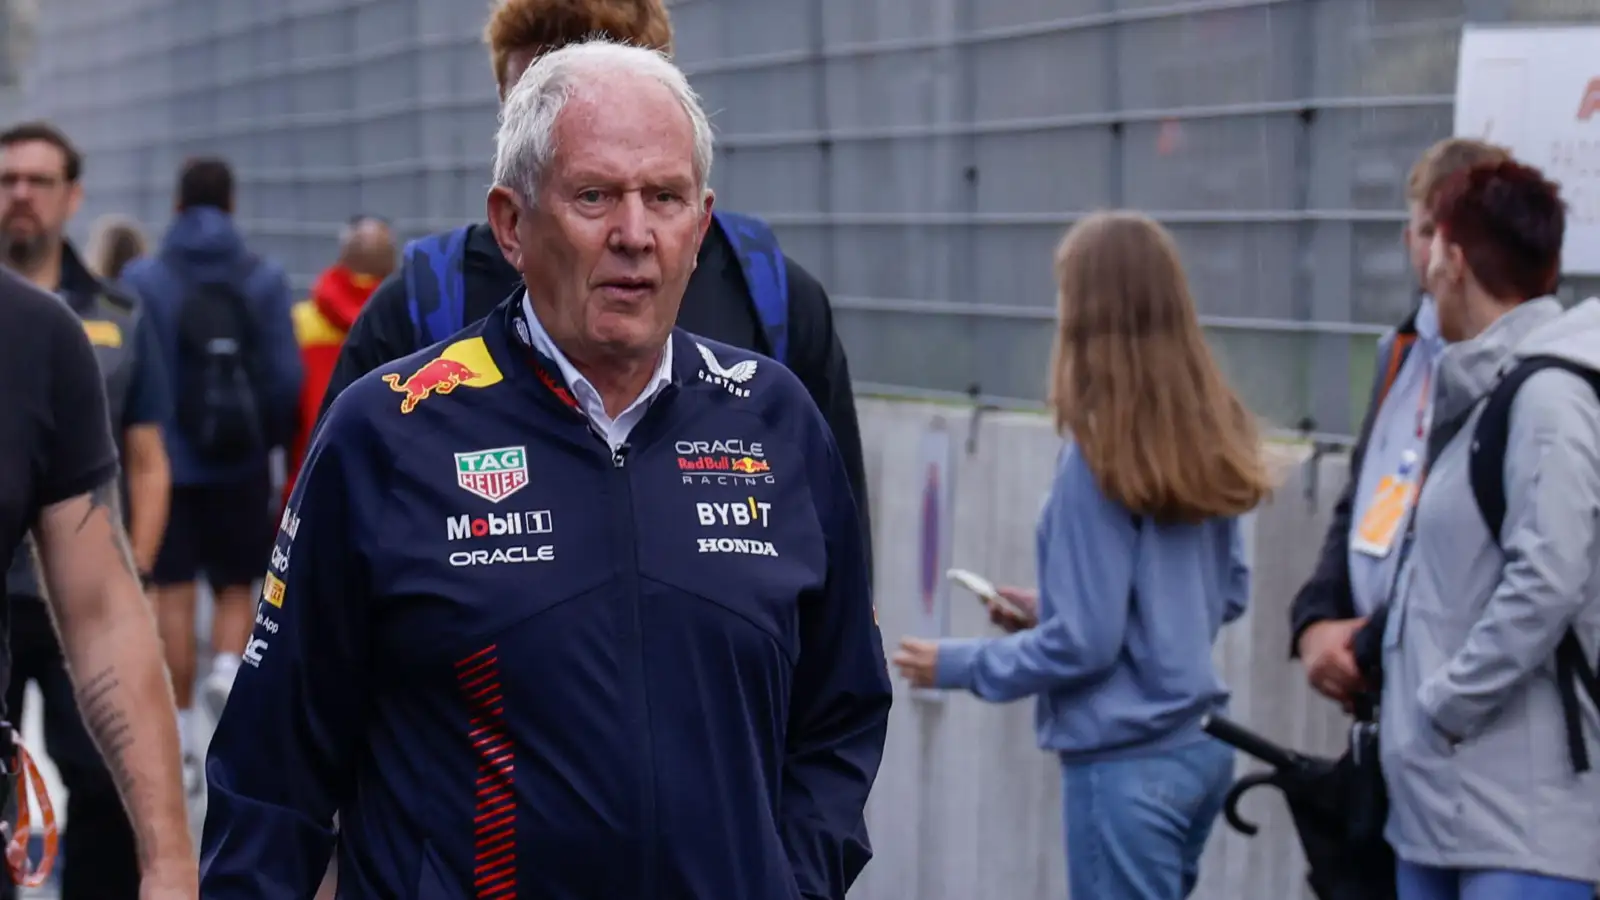 Zandvoort: Red Bull advisor Helmut Marko in the paddock at the Dutch Grand Prix.